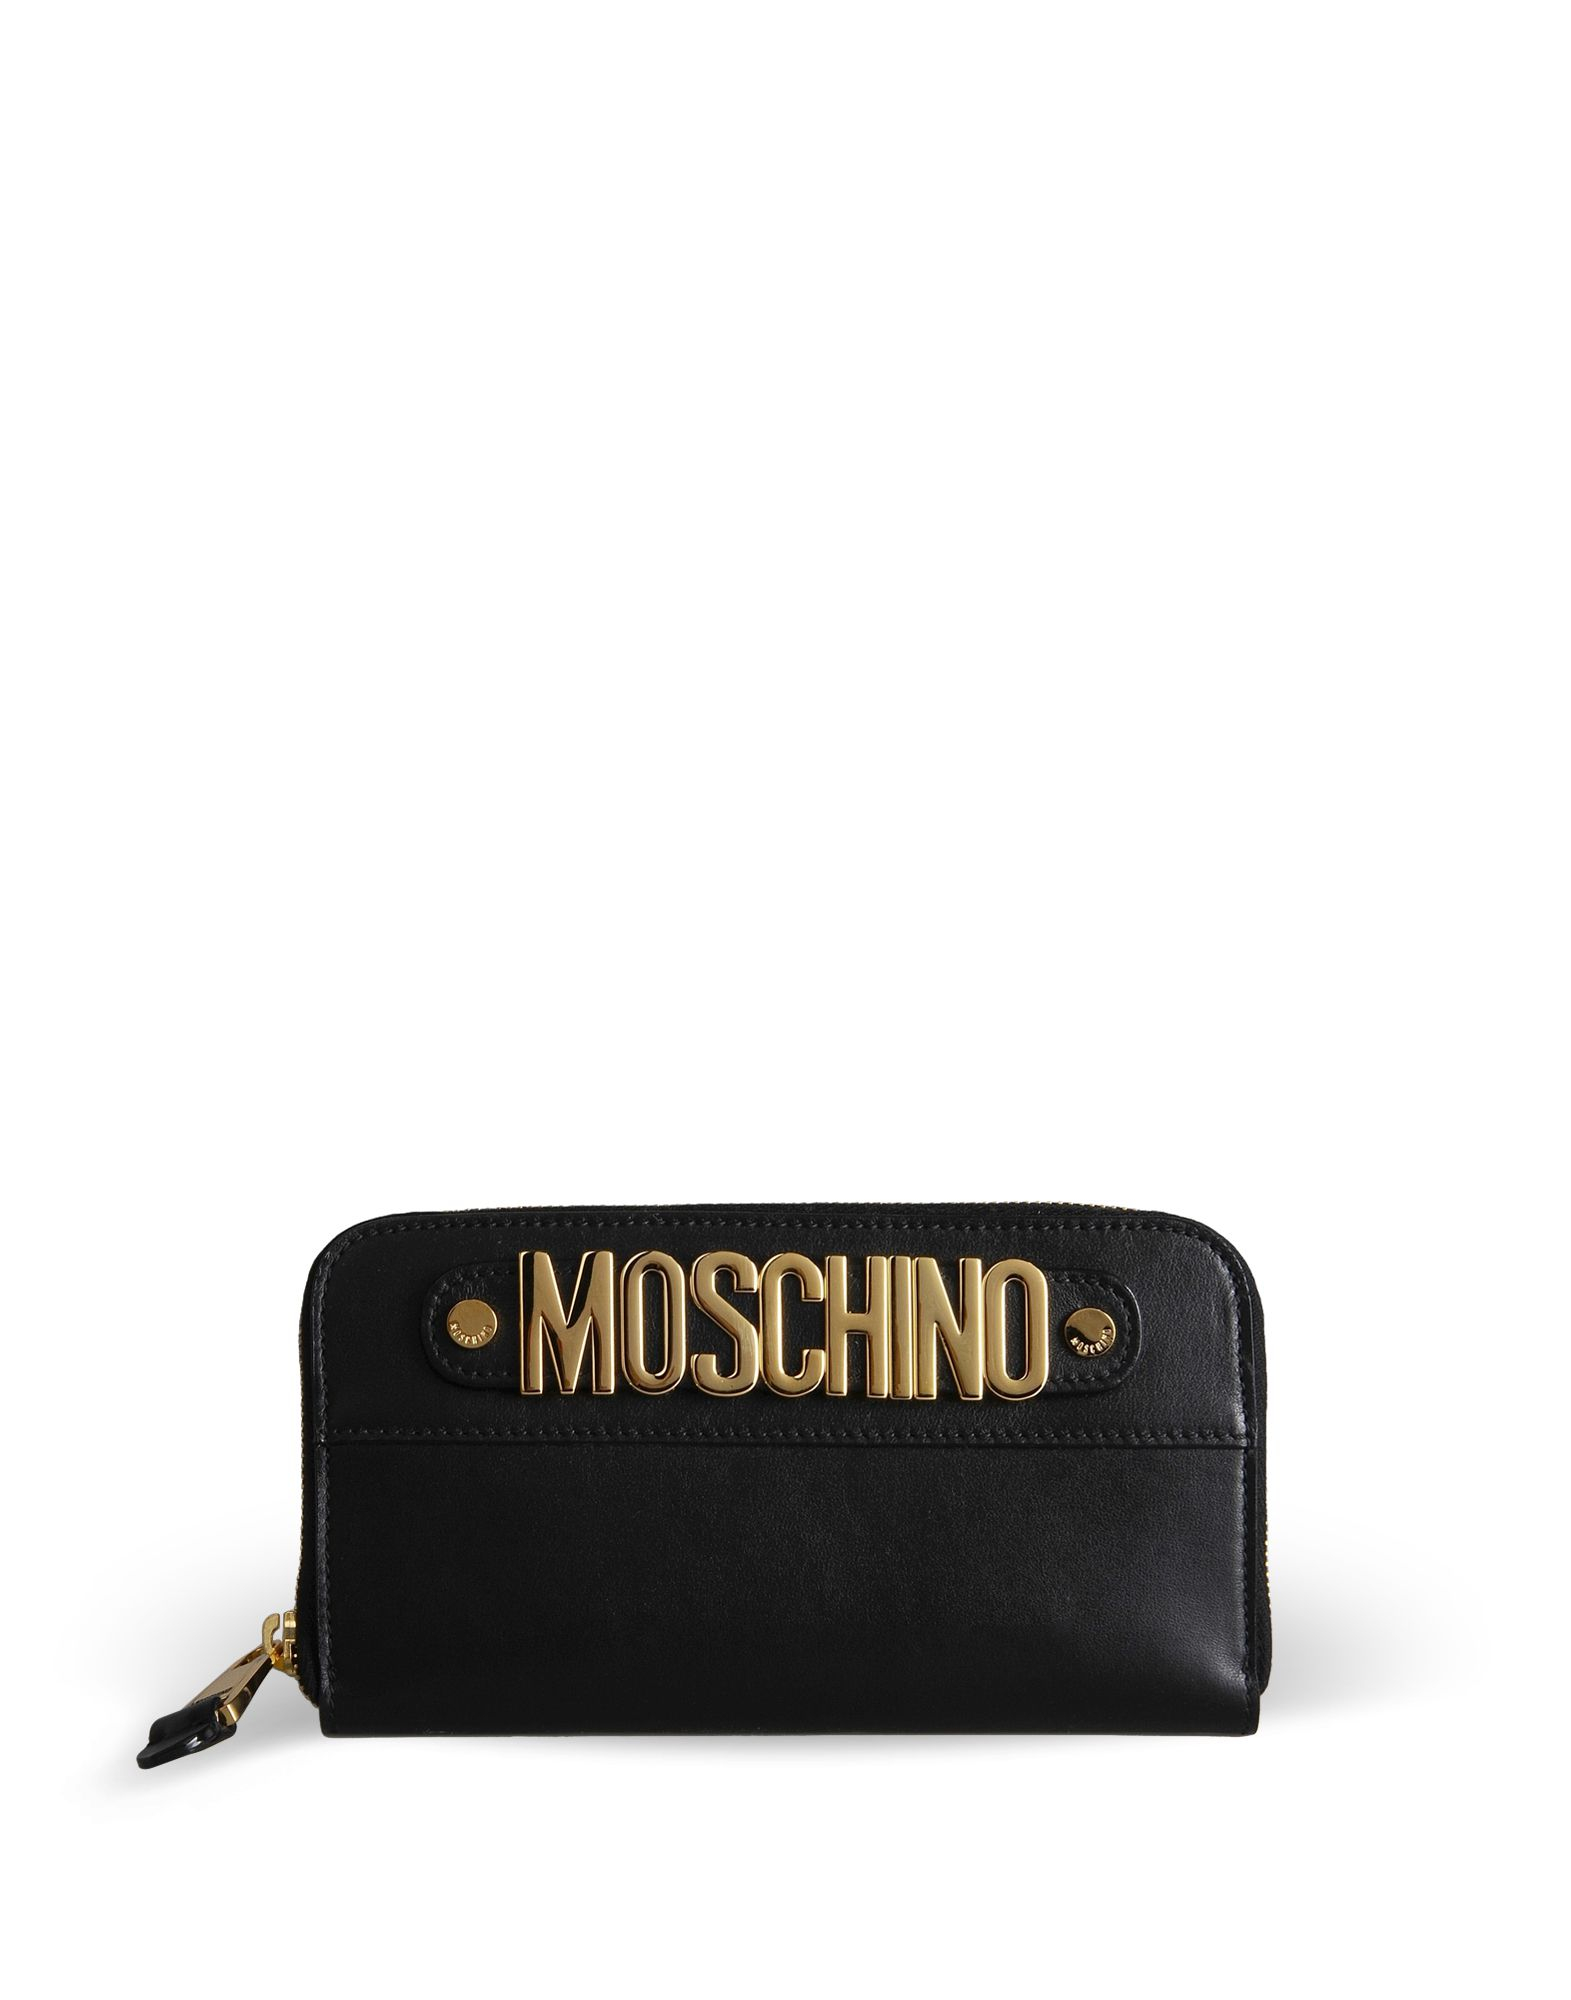 Moschino Wallet in Black | Lyst